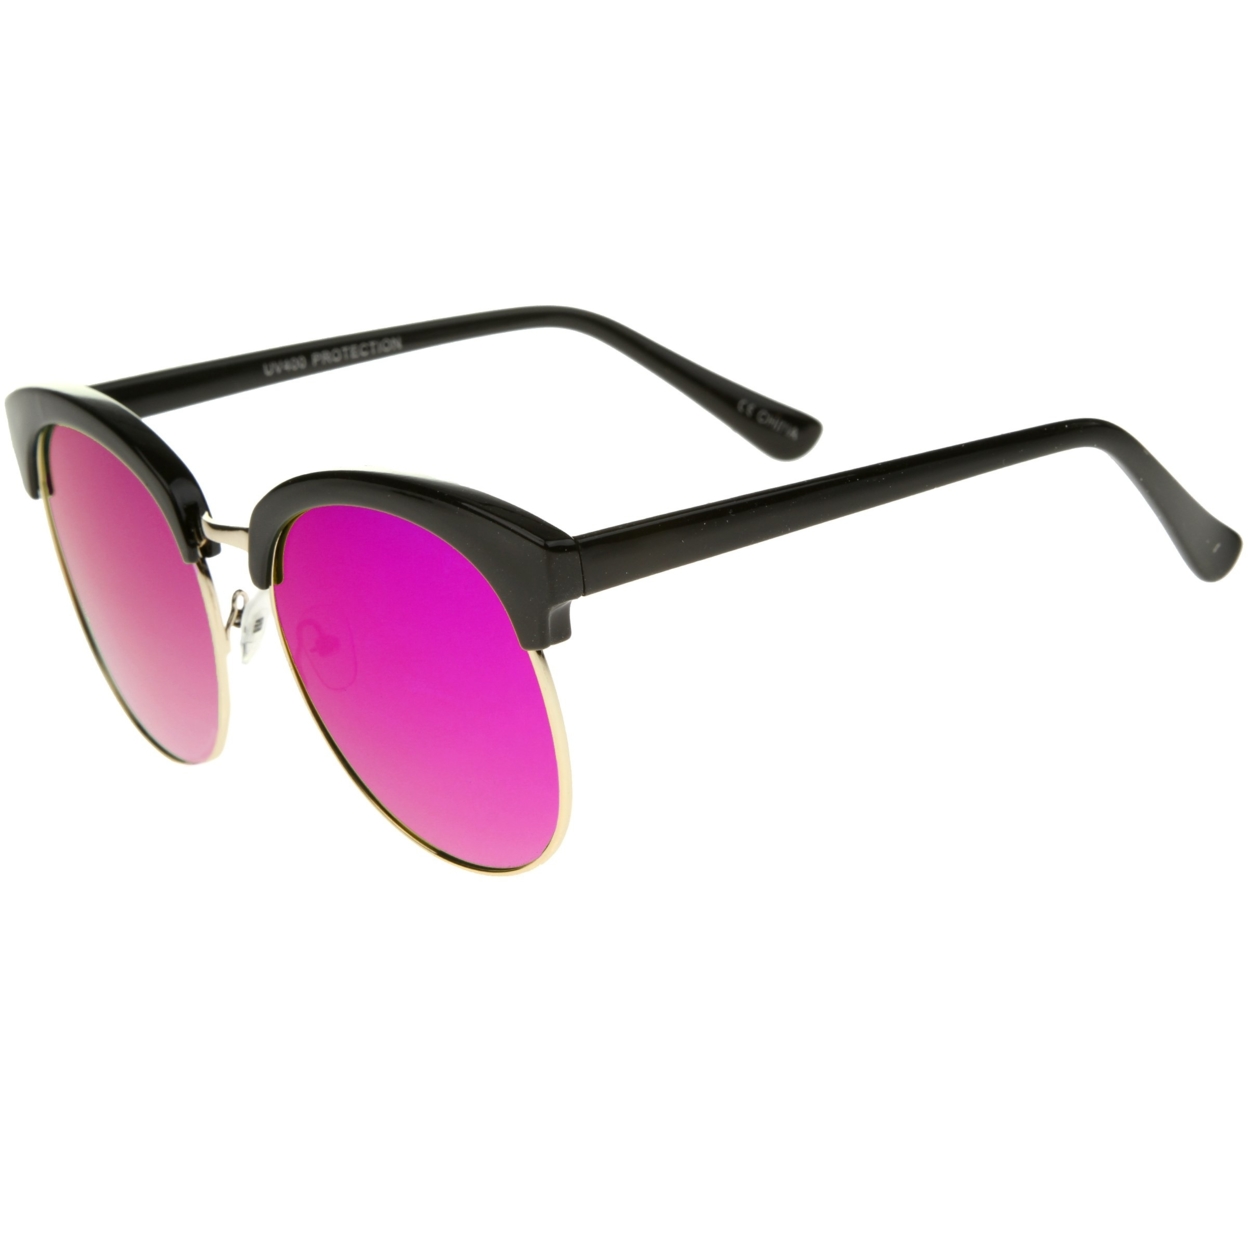 Womens Oversize Half-Frame Mirrored Flat Lens Round Sunglasses 68mm - Tortoise-Gold / Purple Mirror